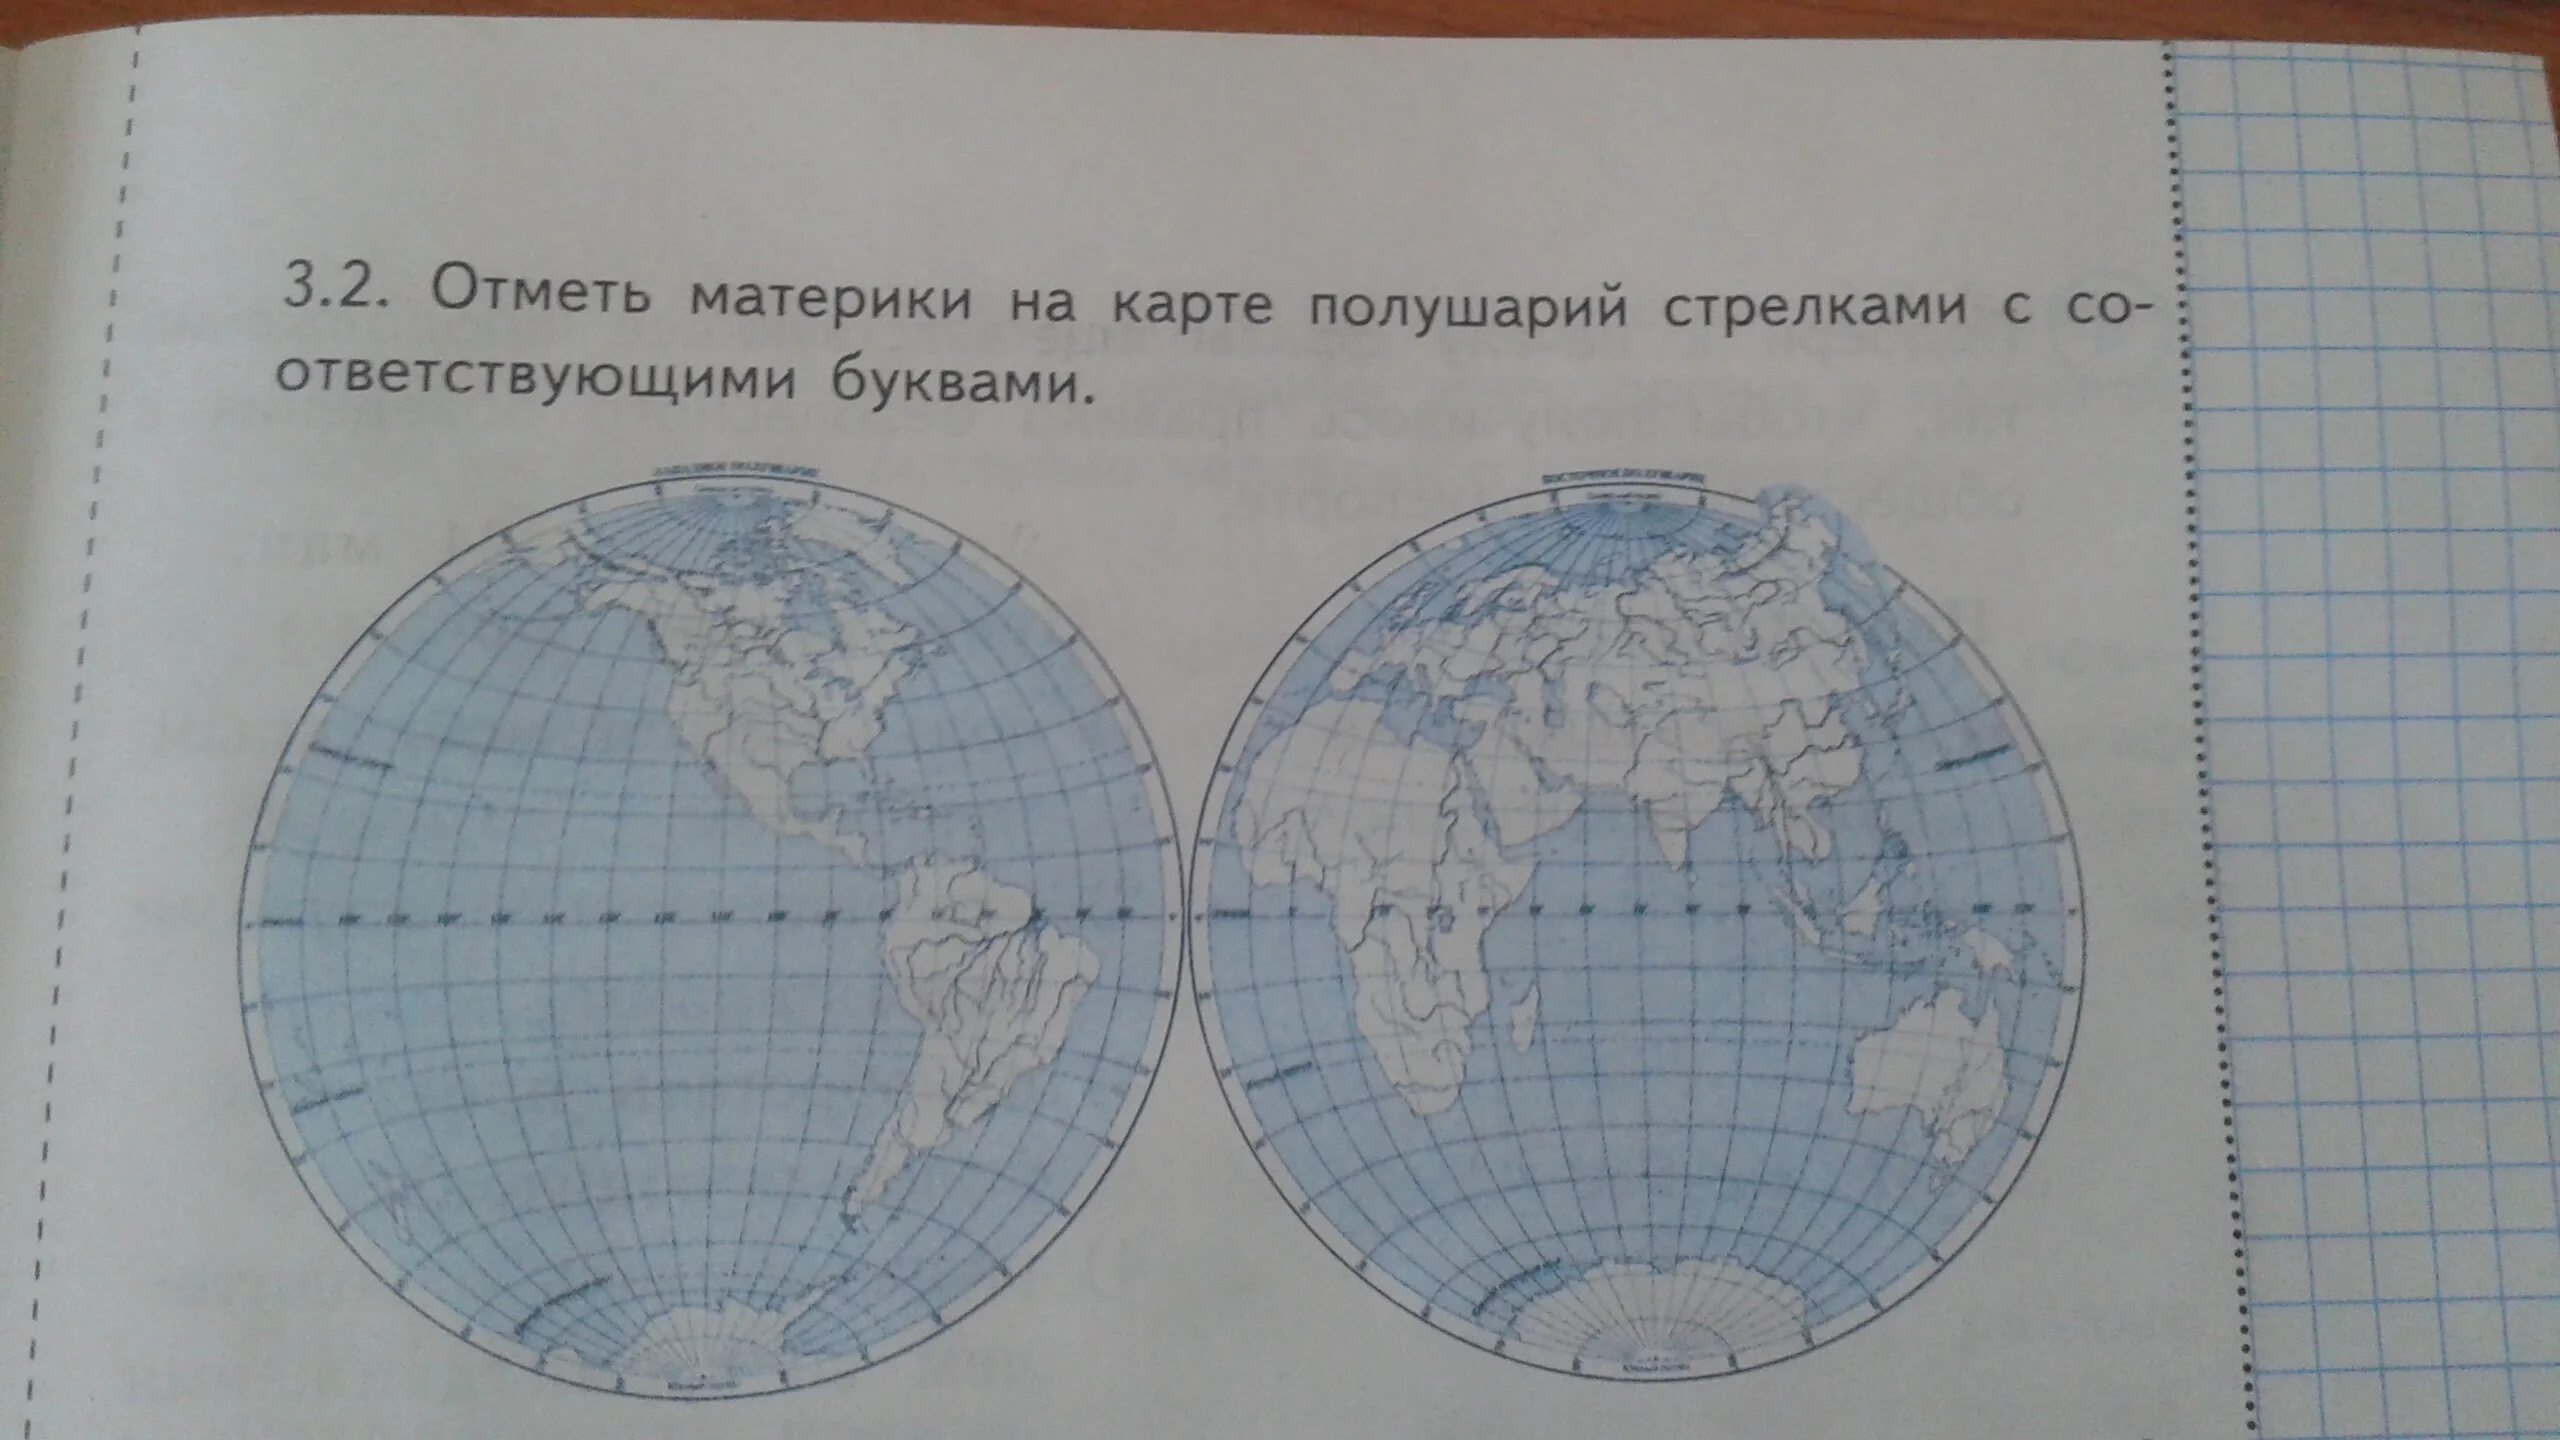 Карта полушарий с материками и Океанами. Карта полушарий материков. Физическая карта полушарий. Карты полушарий земли с названиями материков и океанов. Западное полушарие материки название